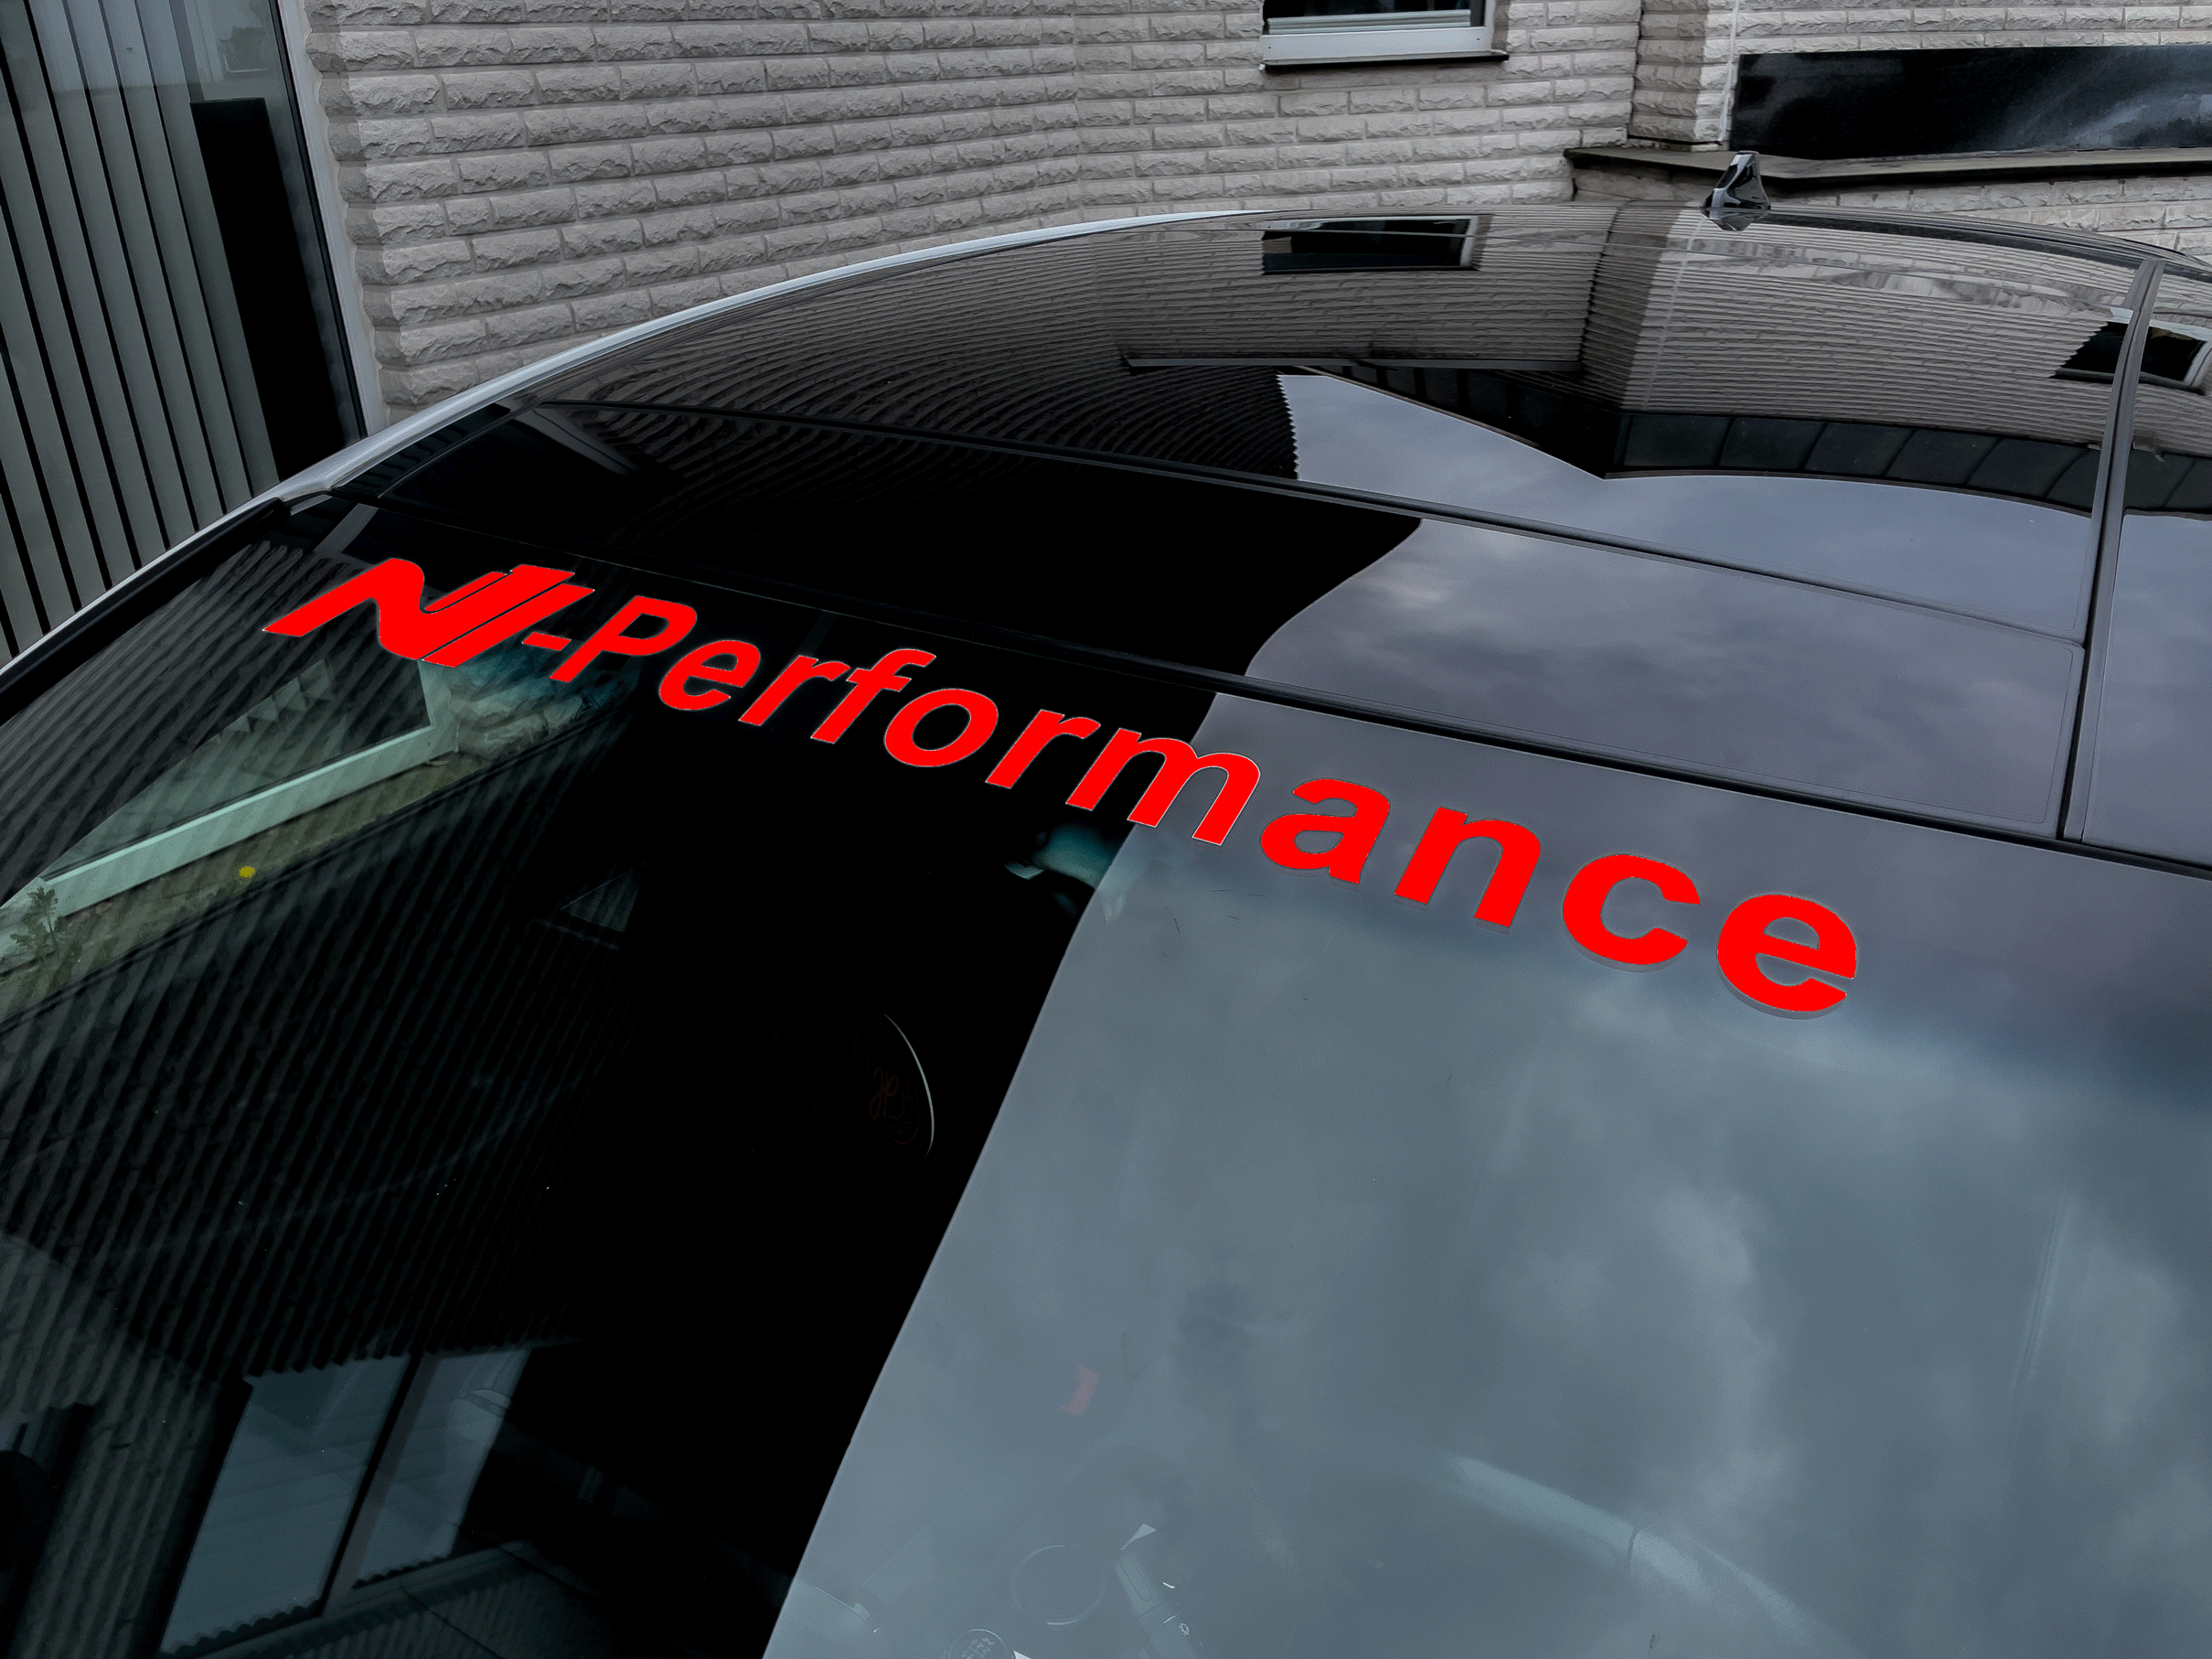 N-Performance window sticker